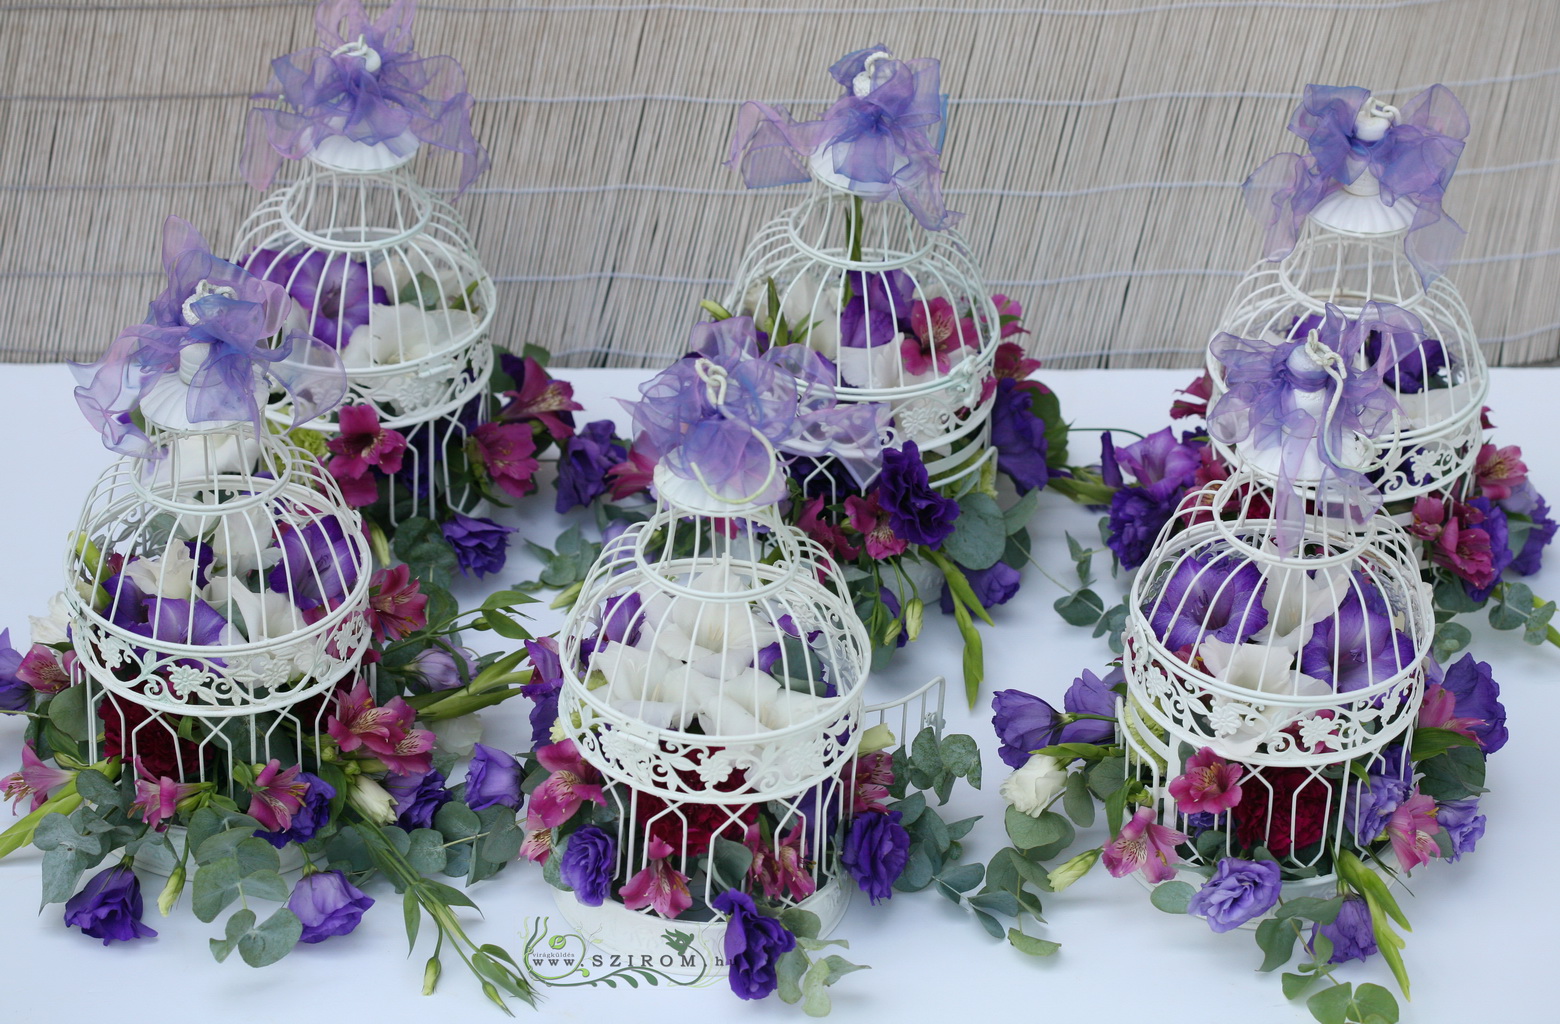 flower delivery Budapest - Birdcage wedding centerpiece, 1pc, Malonyai Castle (liziantusz, roses, Alstromeria, purple)